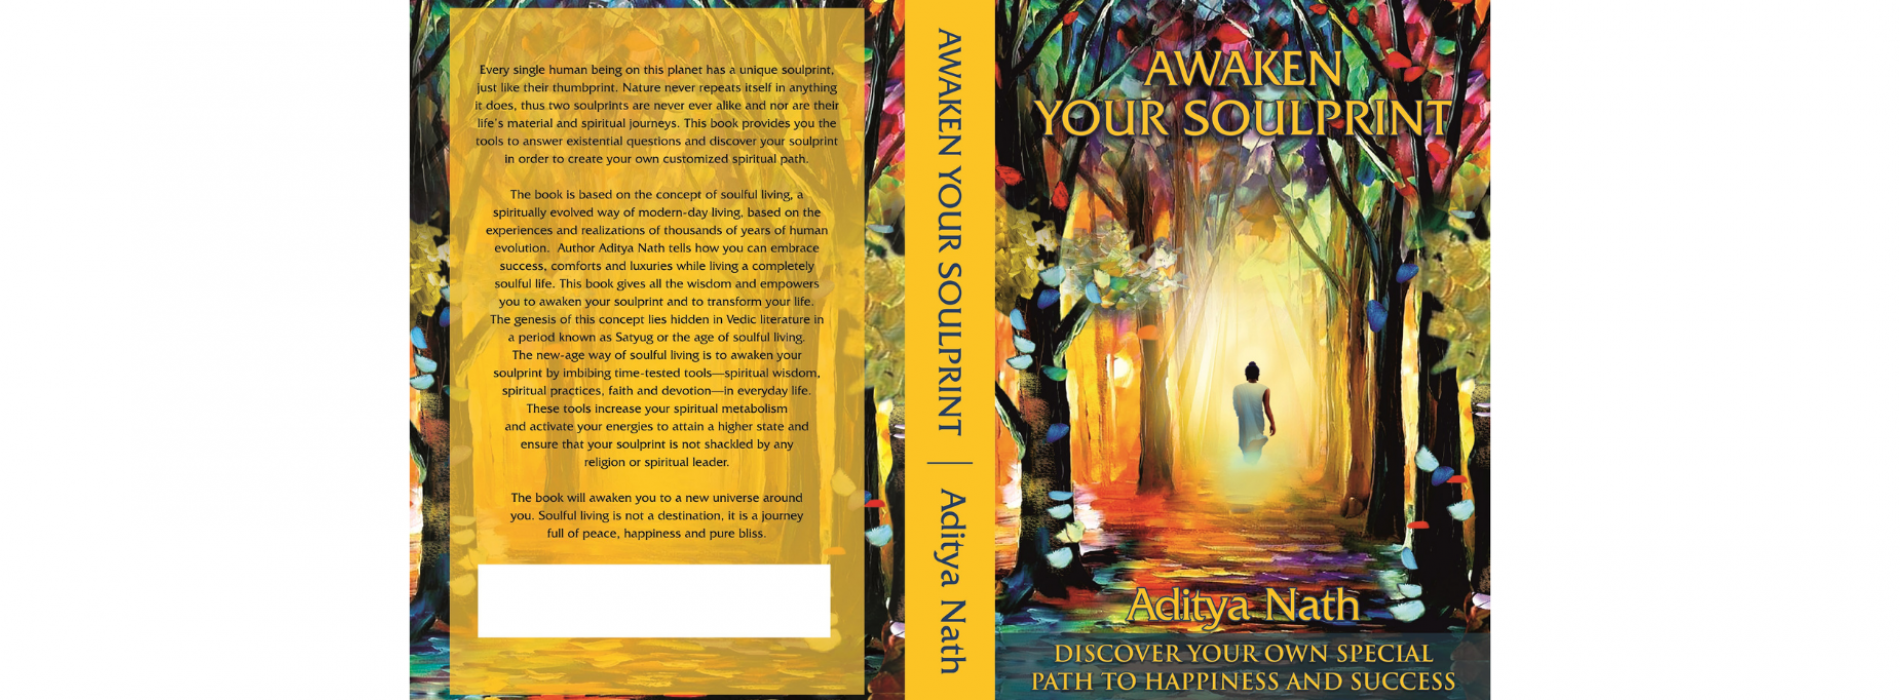 BOOK REVIEW: Awaken Your Soulprint by Aditya Nath